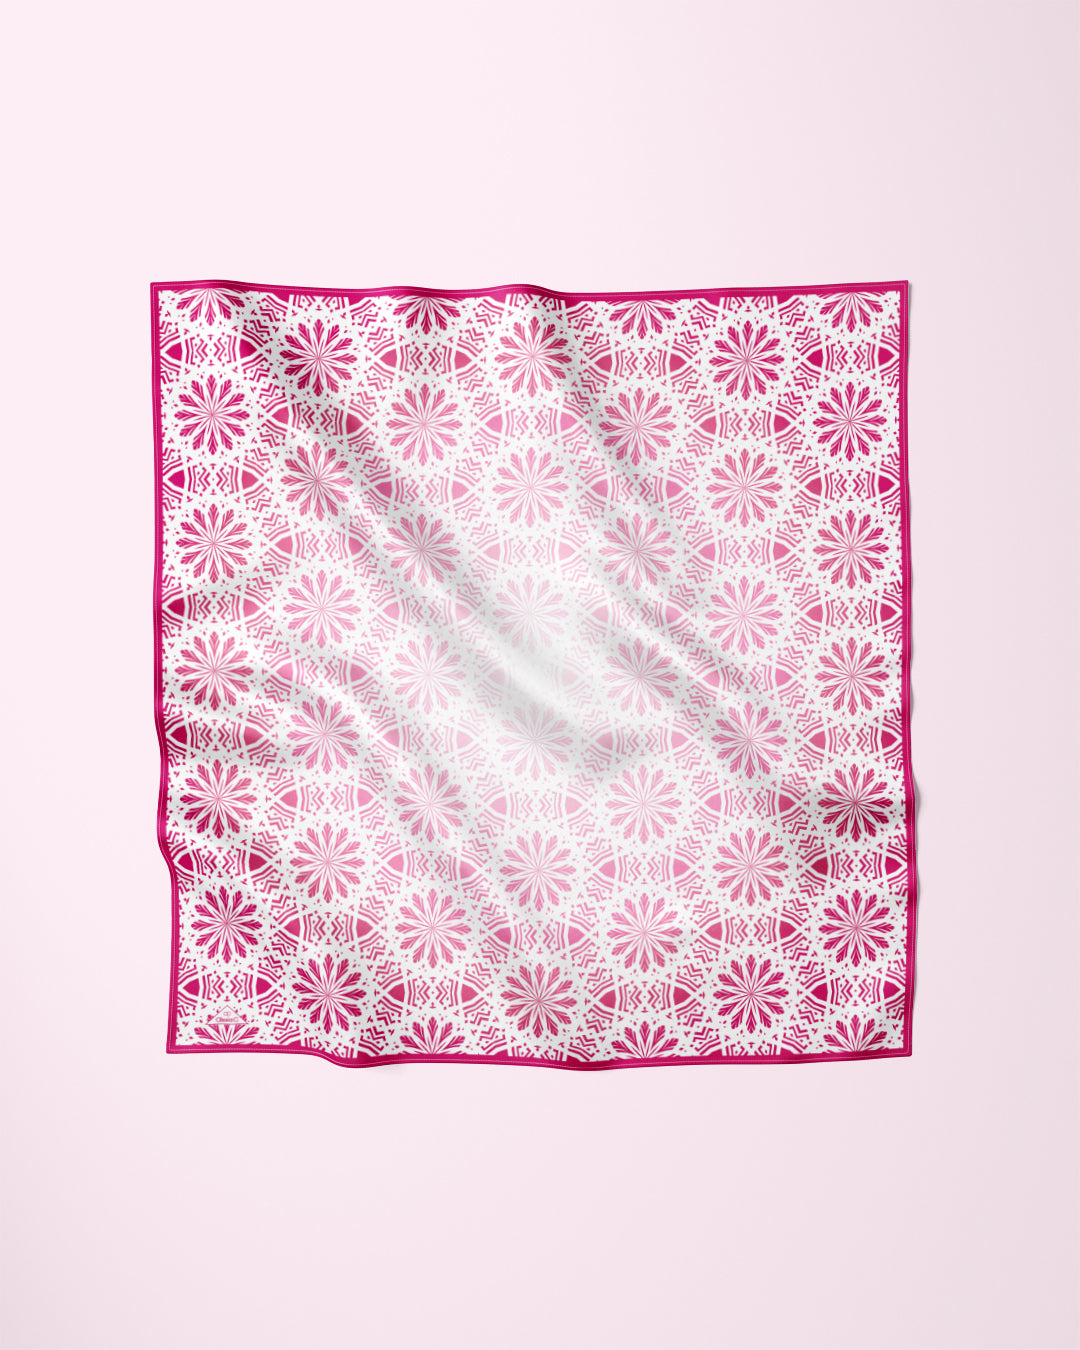 SUNNY LACE Mandala Designer Silk Scarf Pink White by Alesia Chaika